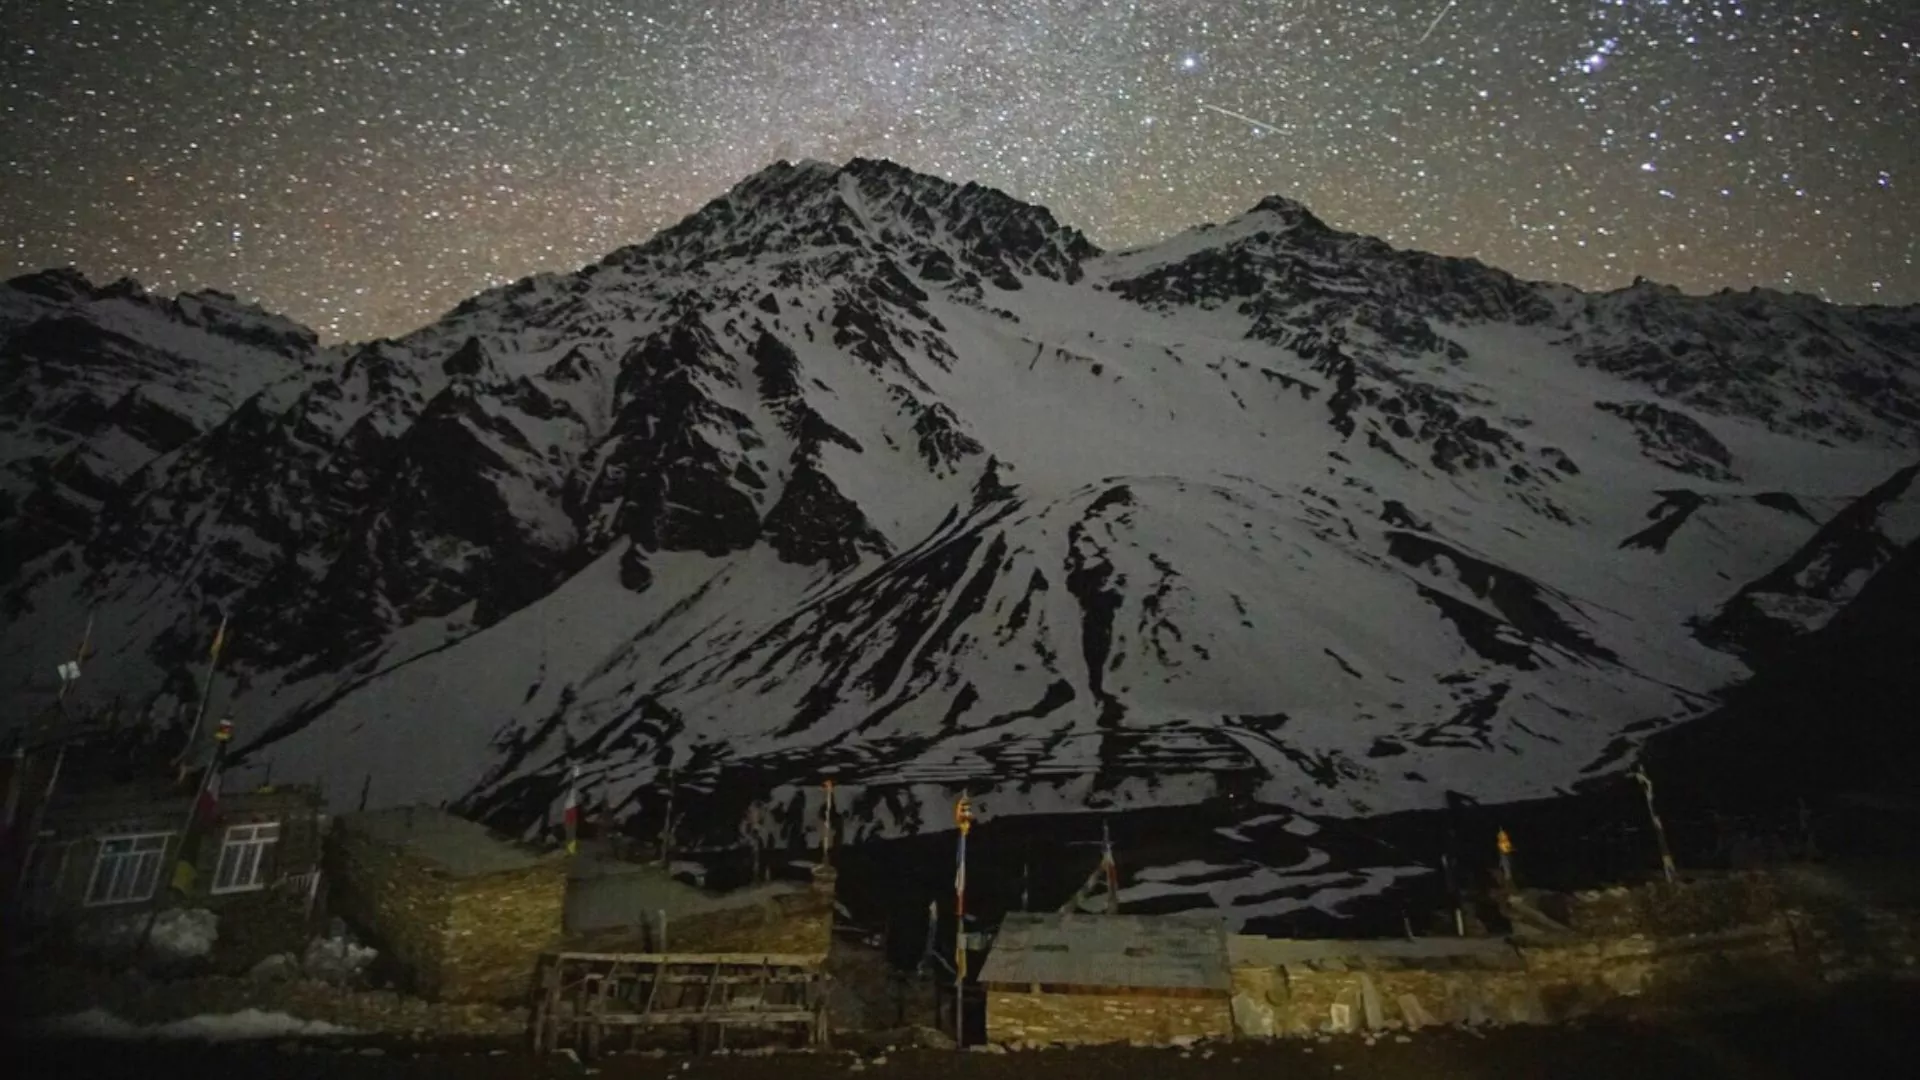 Starry night sky is on display behind Himalaya range and warmly lit high elevation village